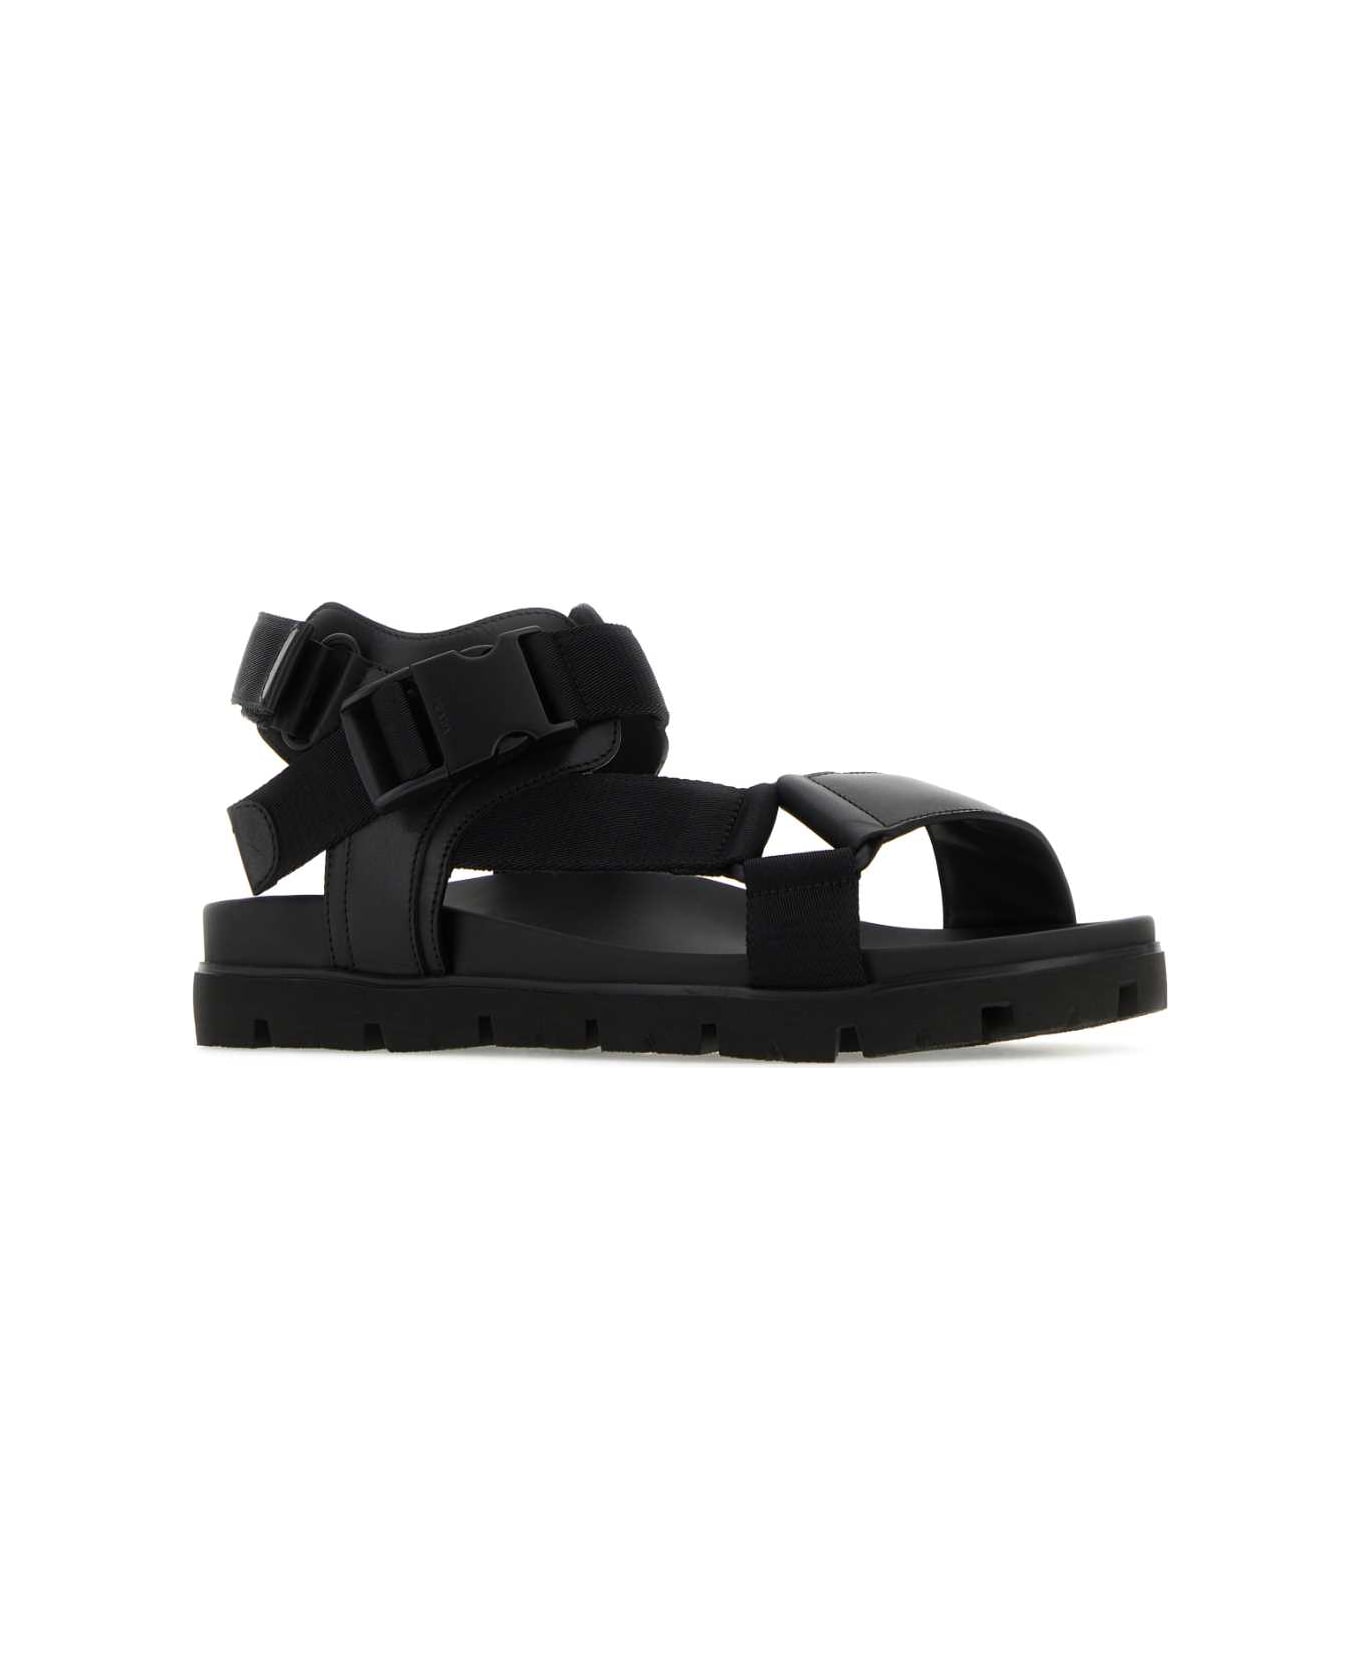 Prada Black Nylon And Leather Sandals - NERO1